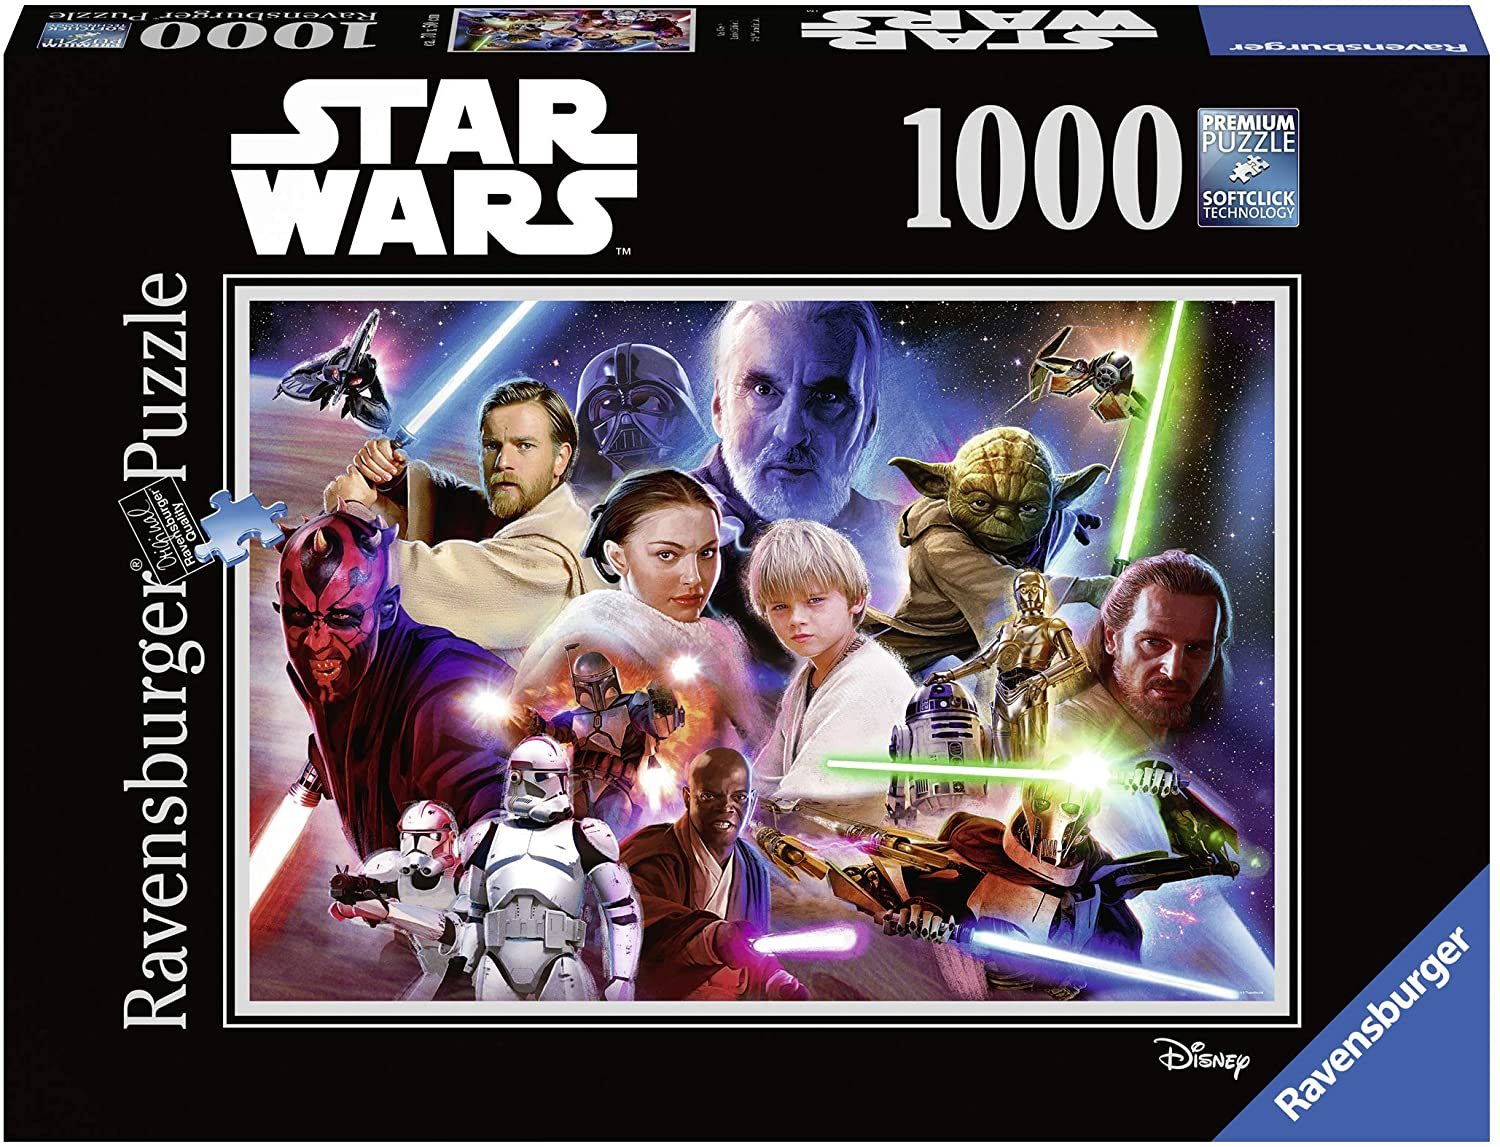 Ravensburger Star Wars Saga 500 Piece Puzzle